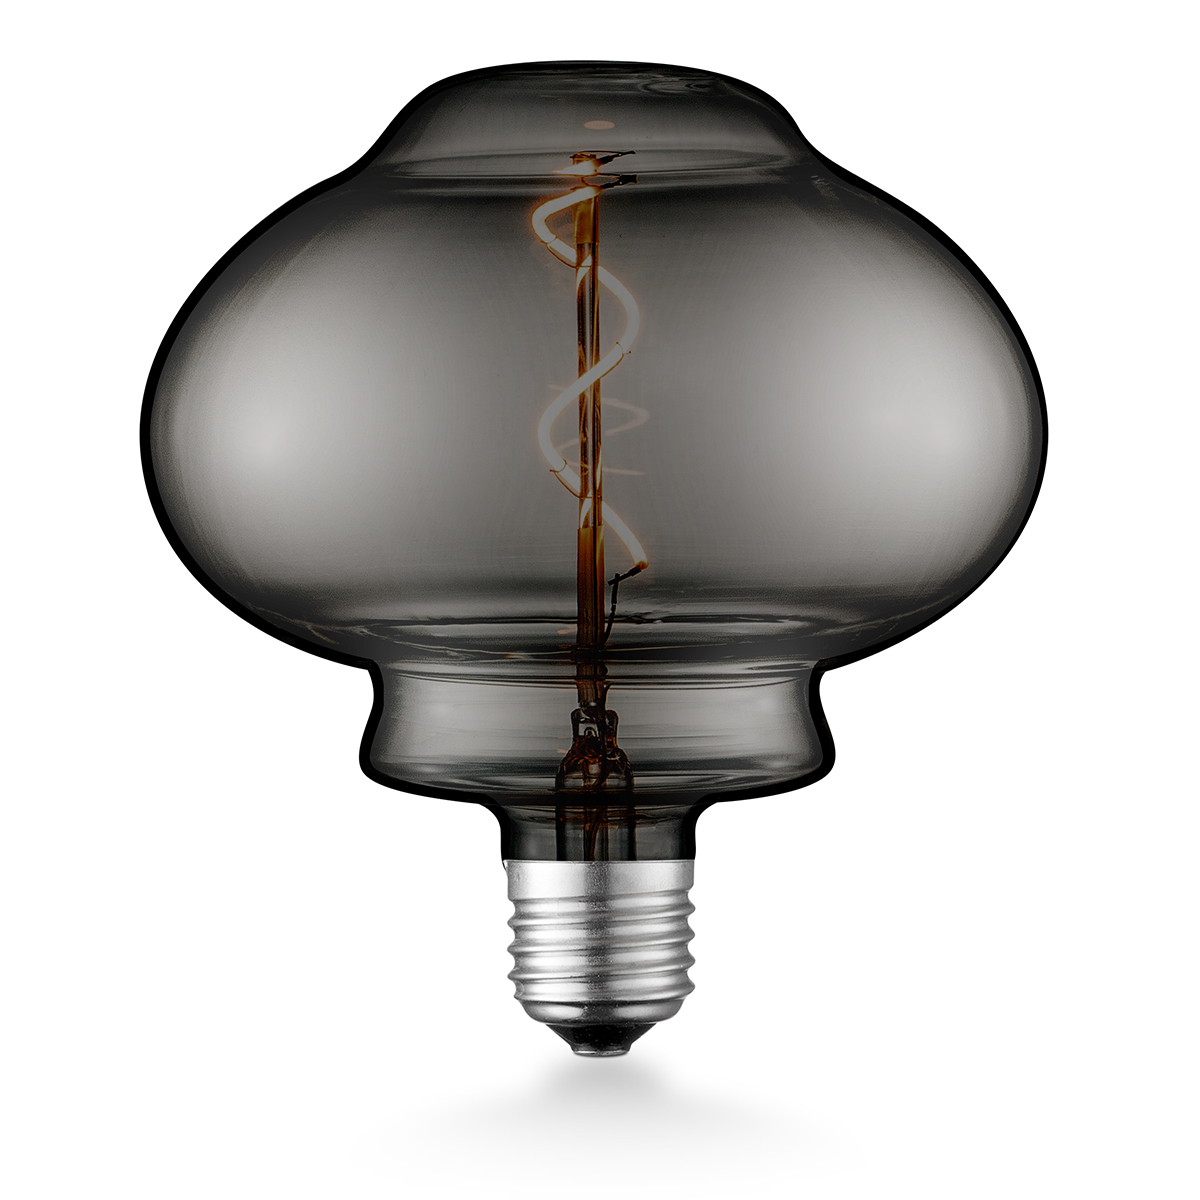 Tangla lighting - TLB-8037-04TM - LED Light Bulb Single Spiral filament - special 4W titanium - mushroom - dimmable - E27